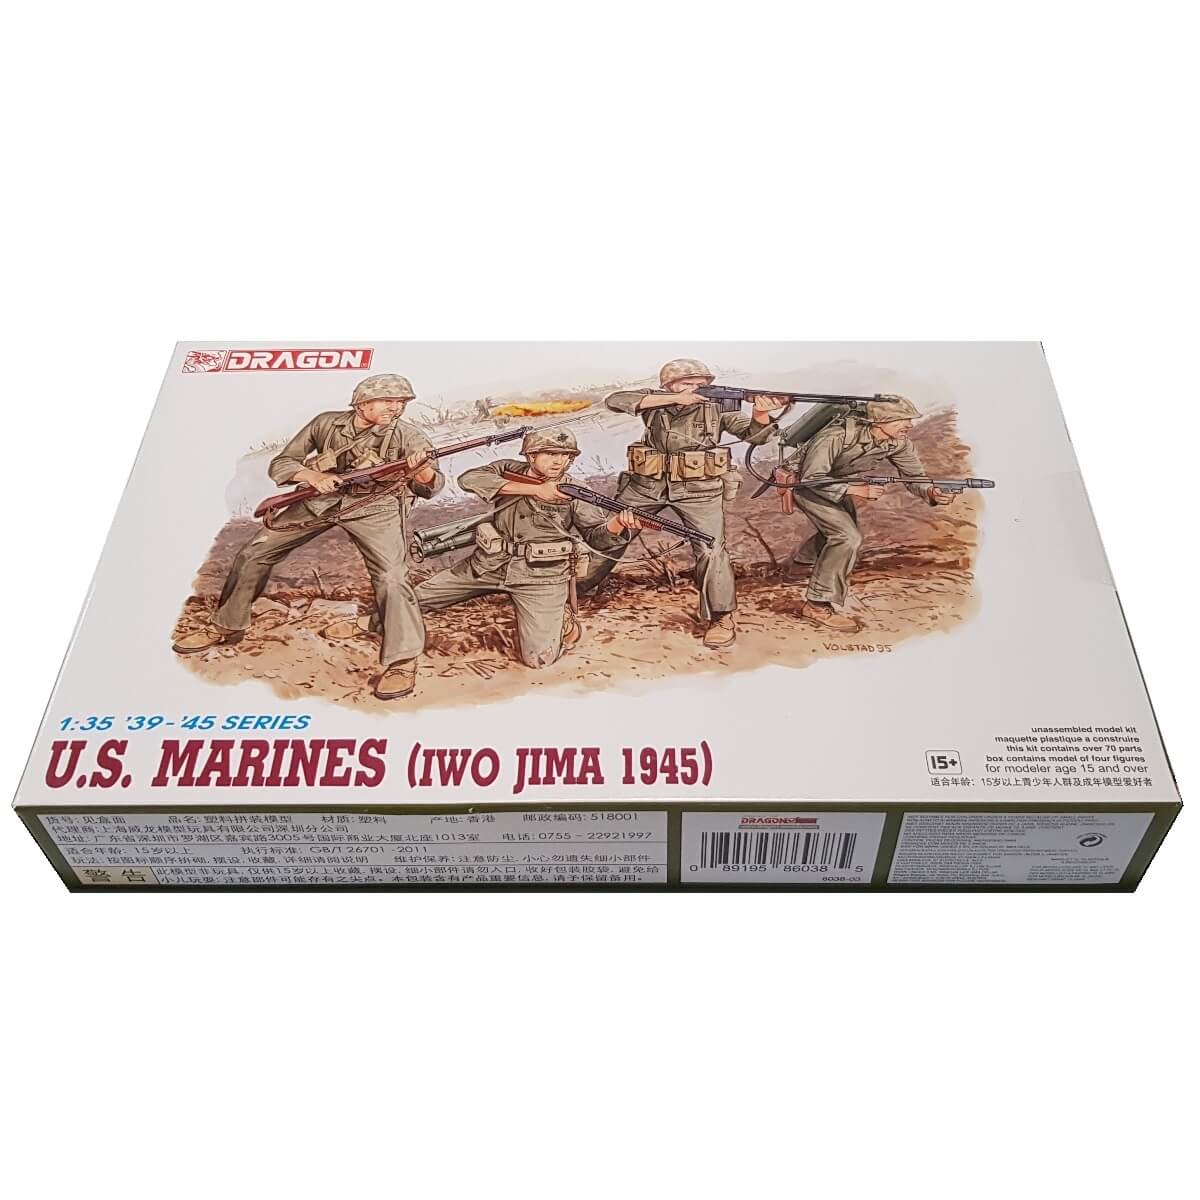 1:35 US Marines - Iwo Jima 1945 - DRAGON